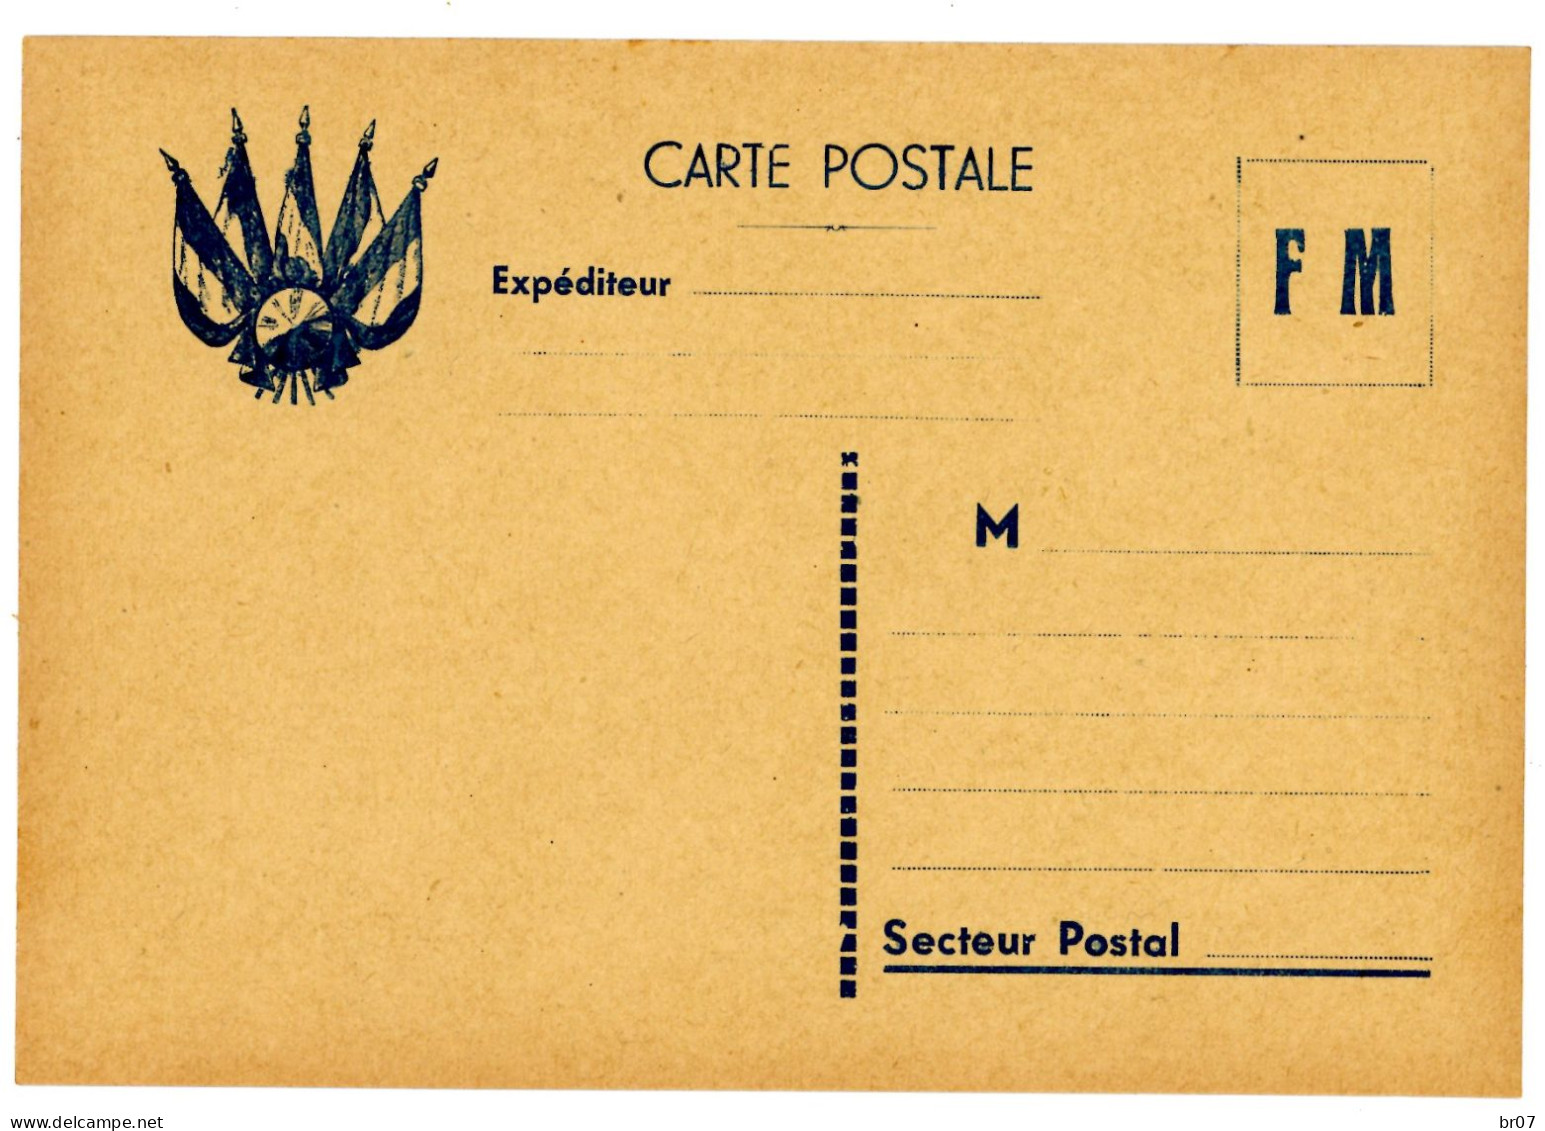 CPFM DESTINATION HORS HEXAGONE VOIR SECTEUR POSTAL N° NEUVE - 2. Weltkrieg 1939-1945